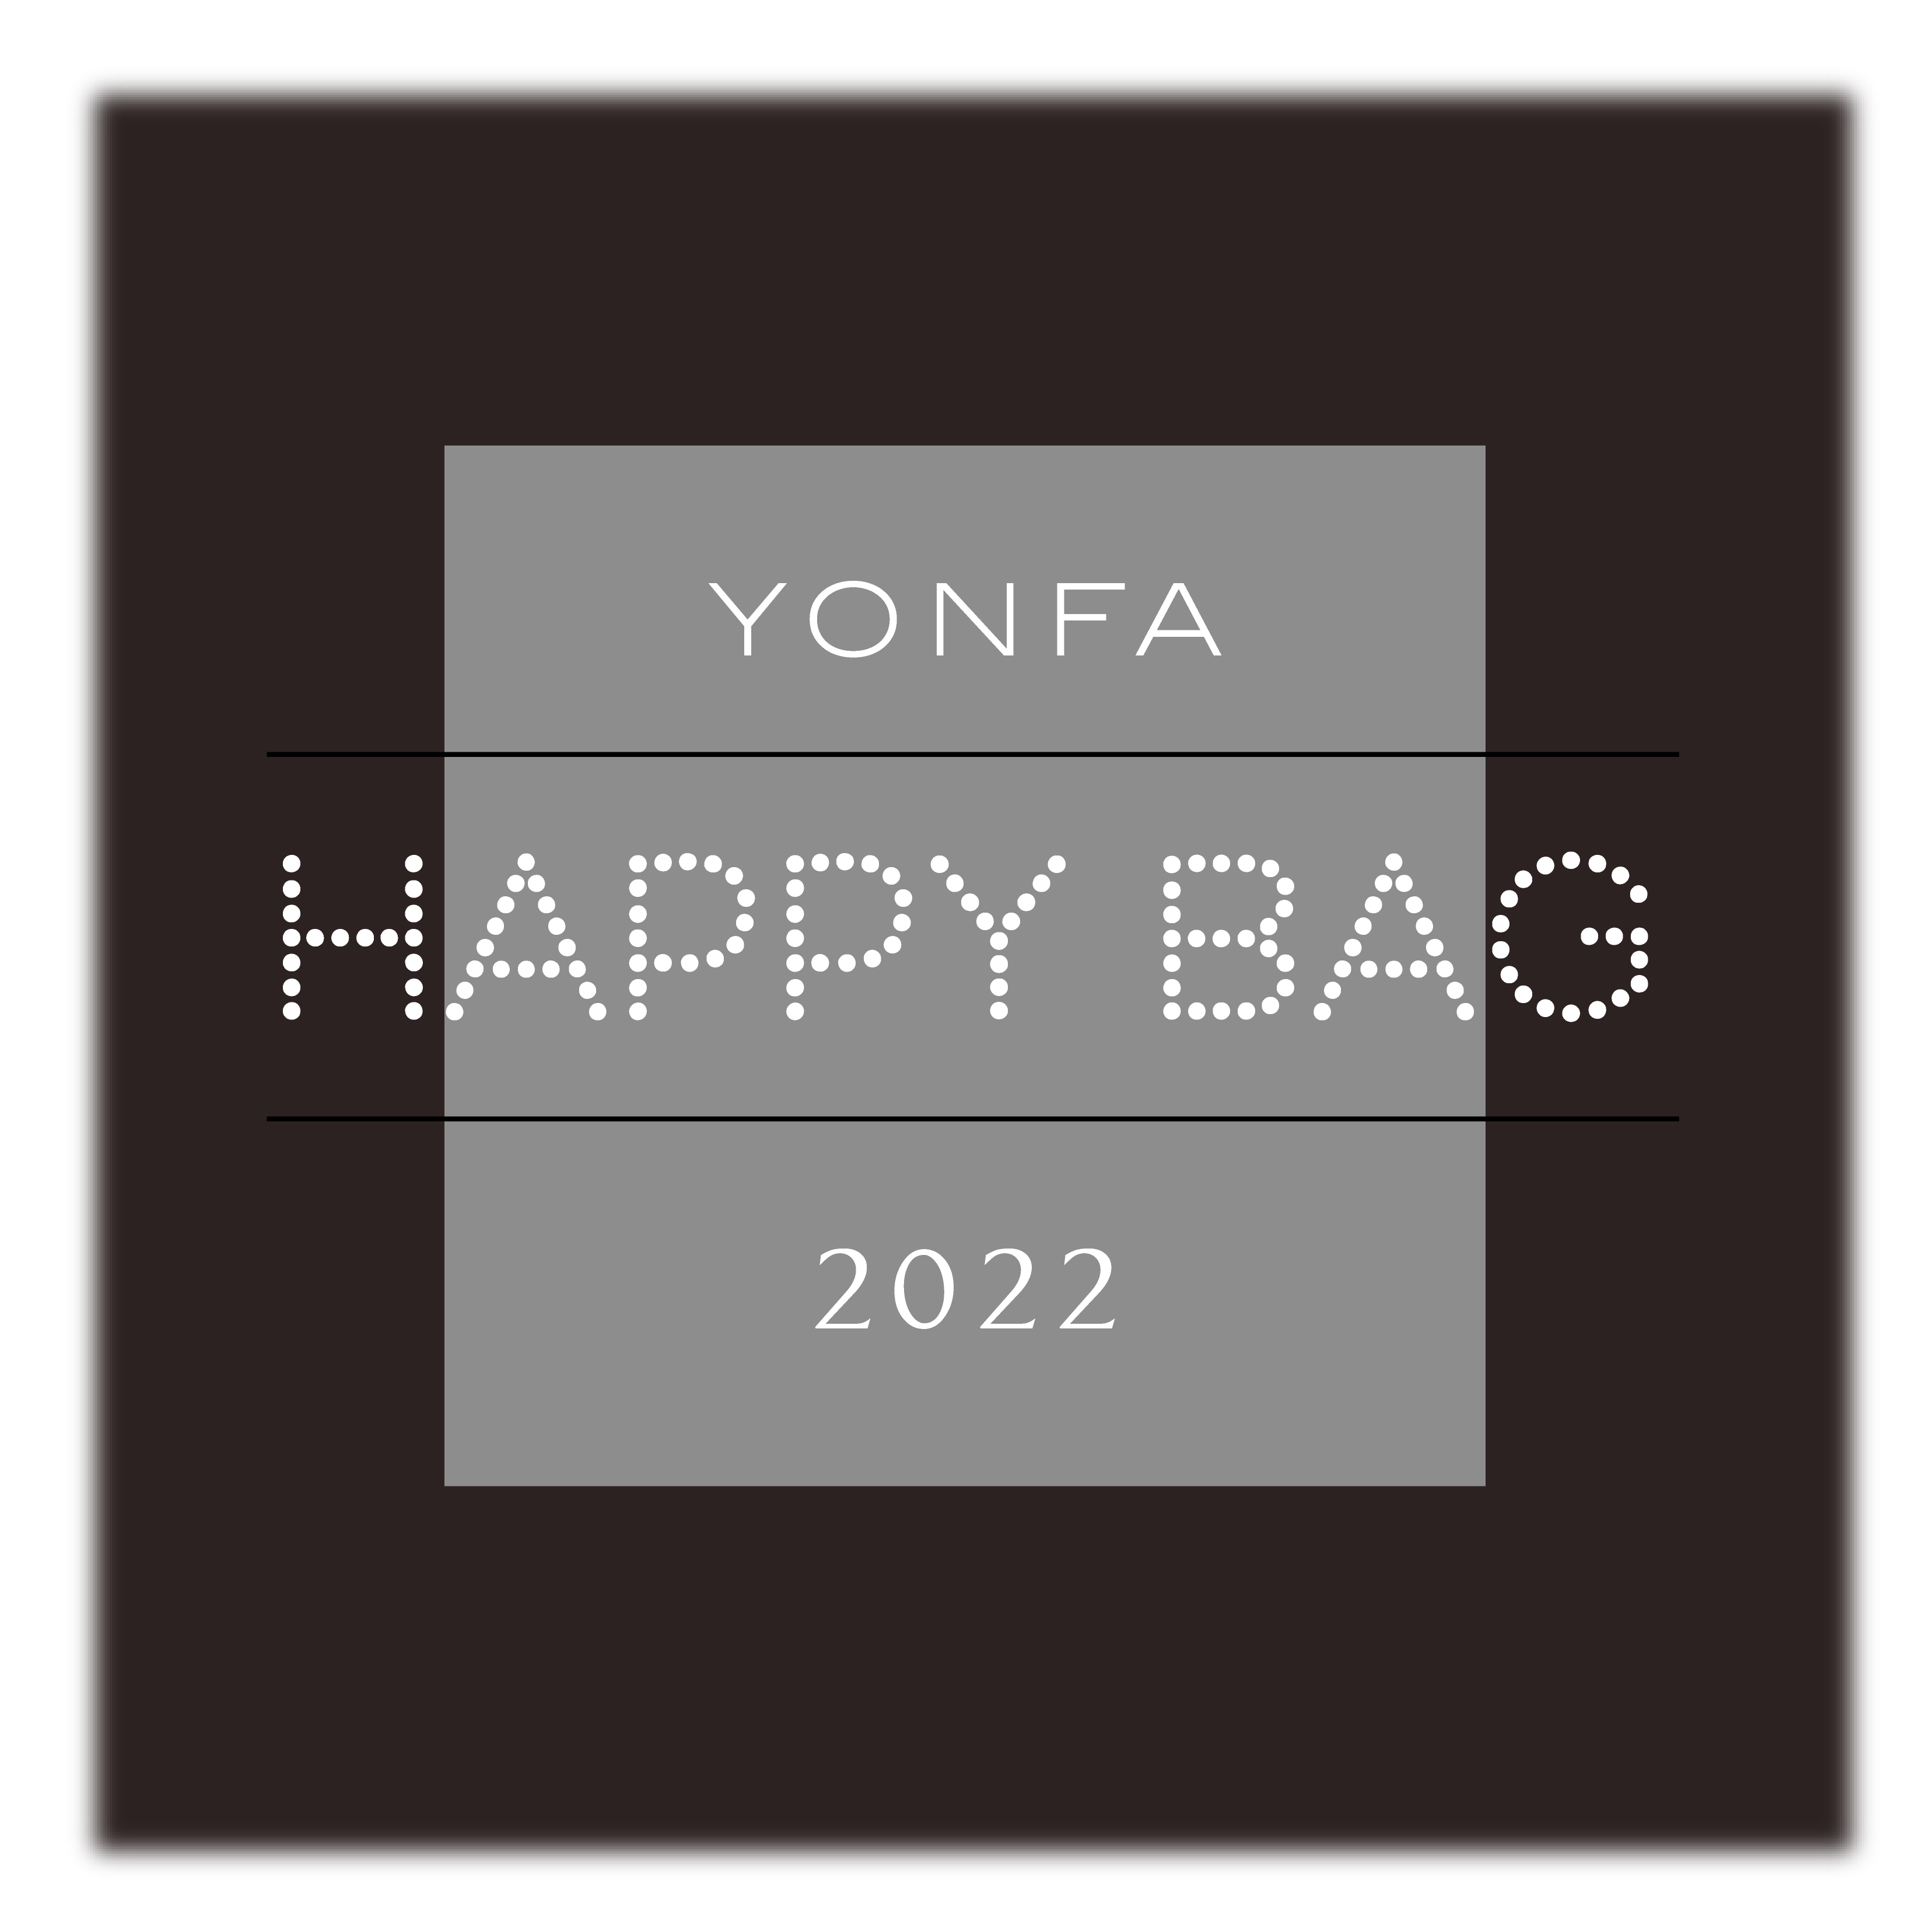 YONFA / TOPS